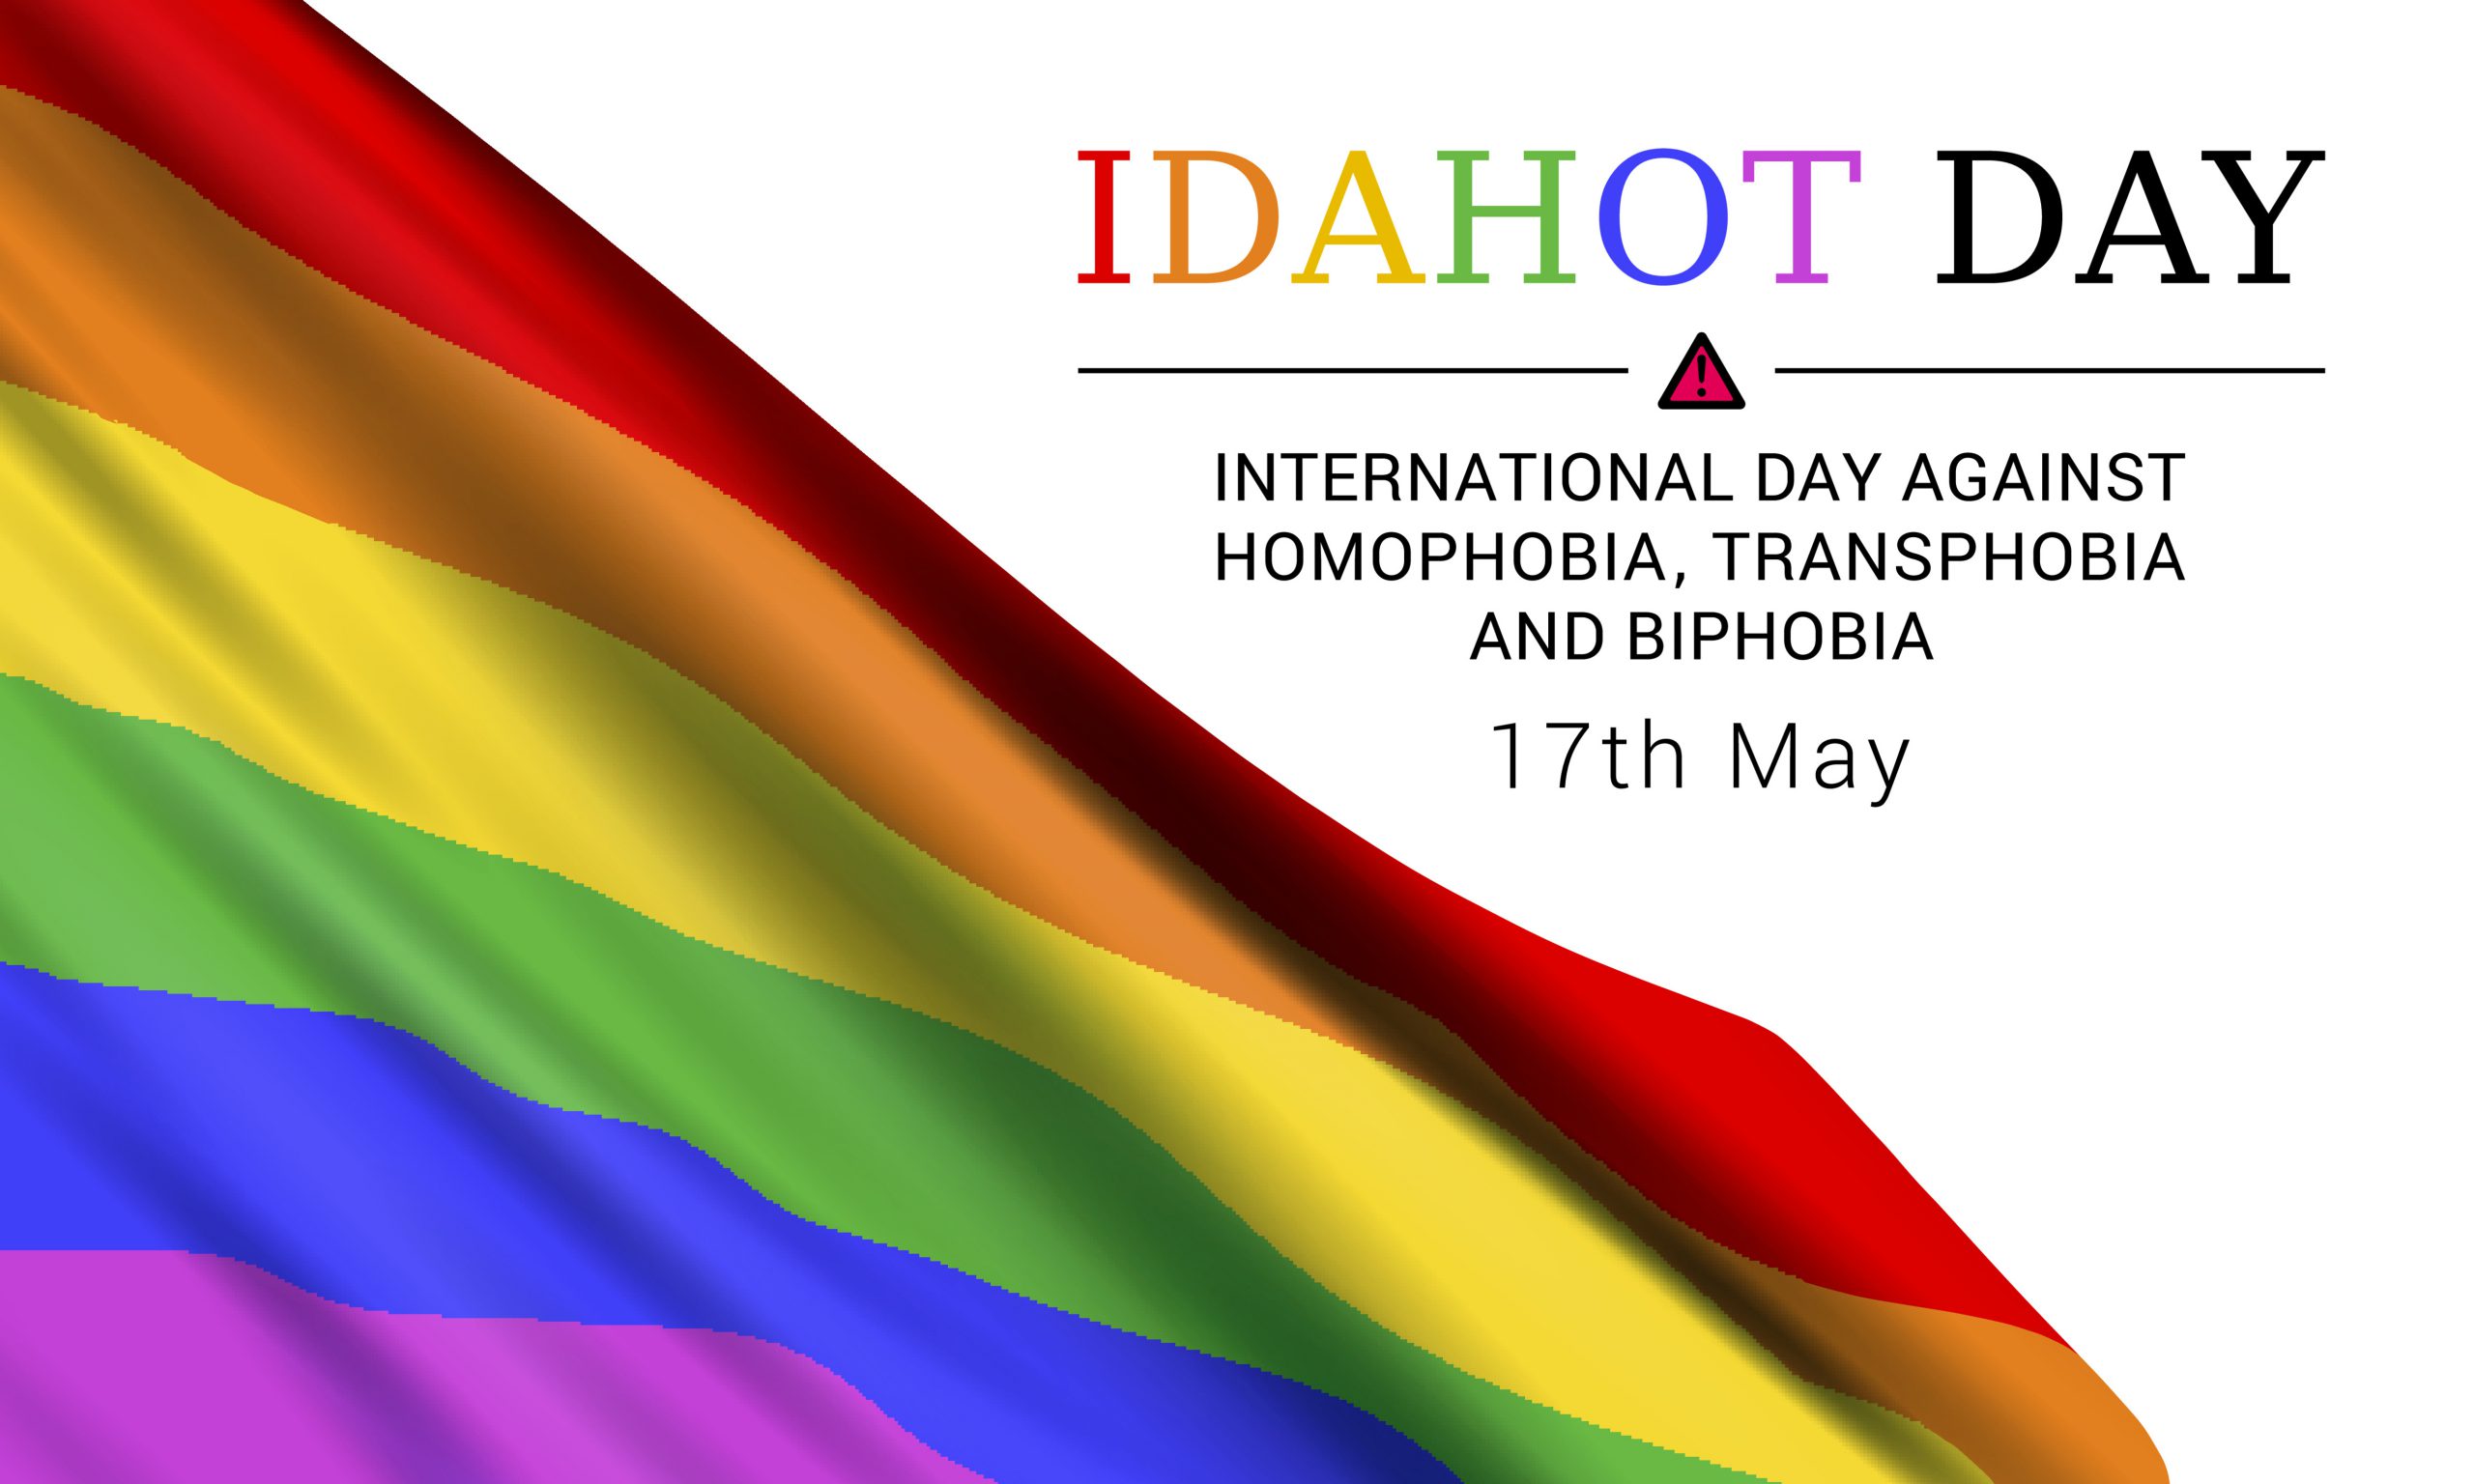 Marking International Day against Homophobia, Transphobia and Biphobia